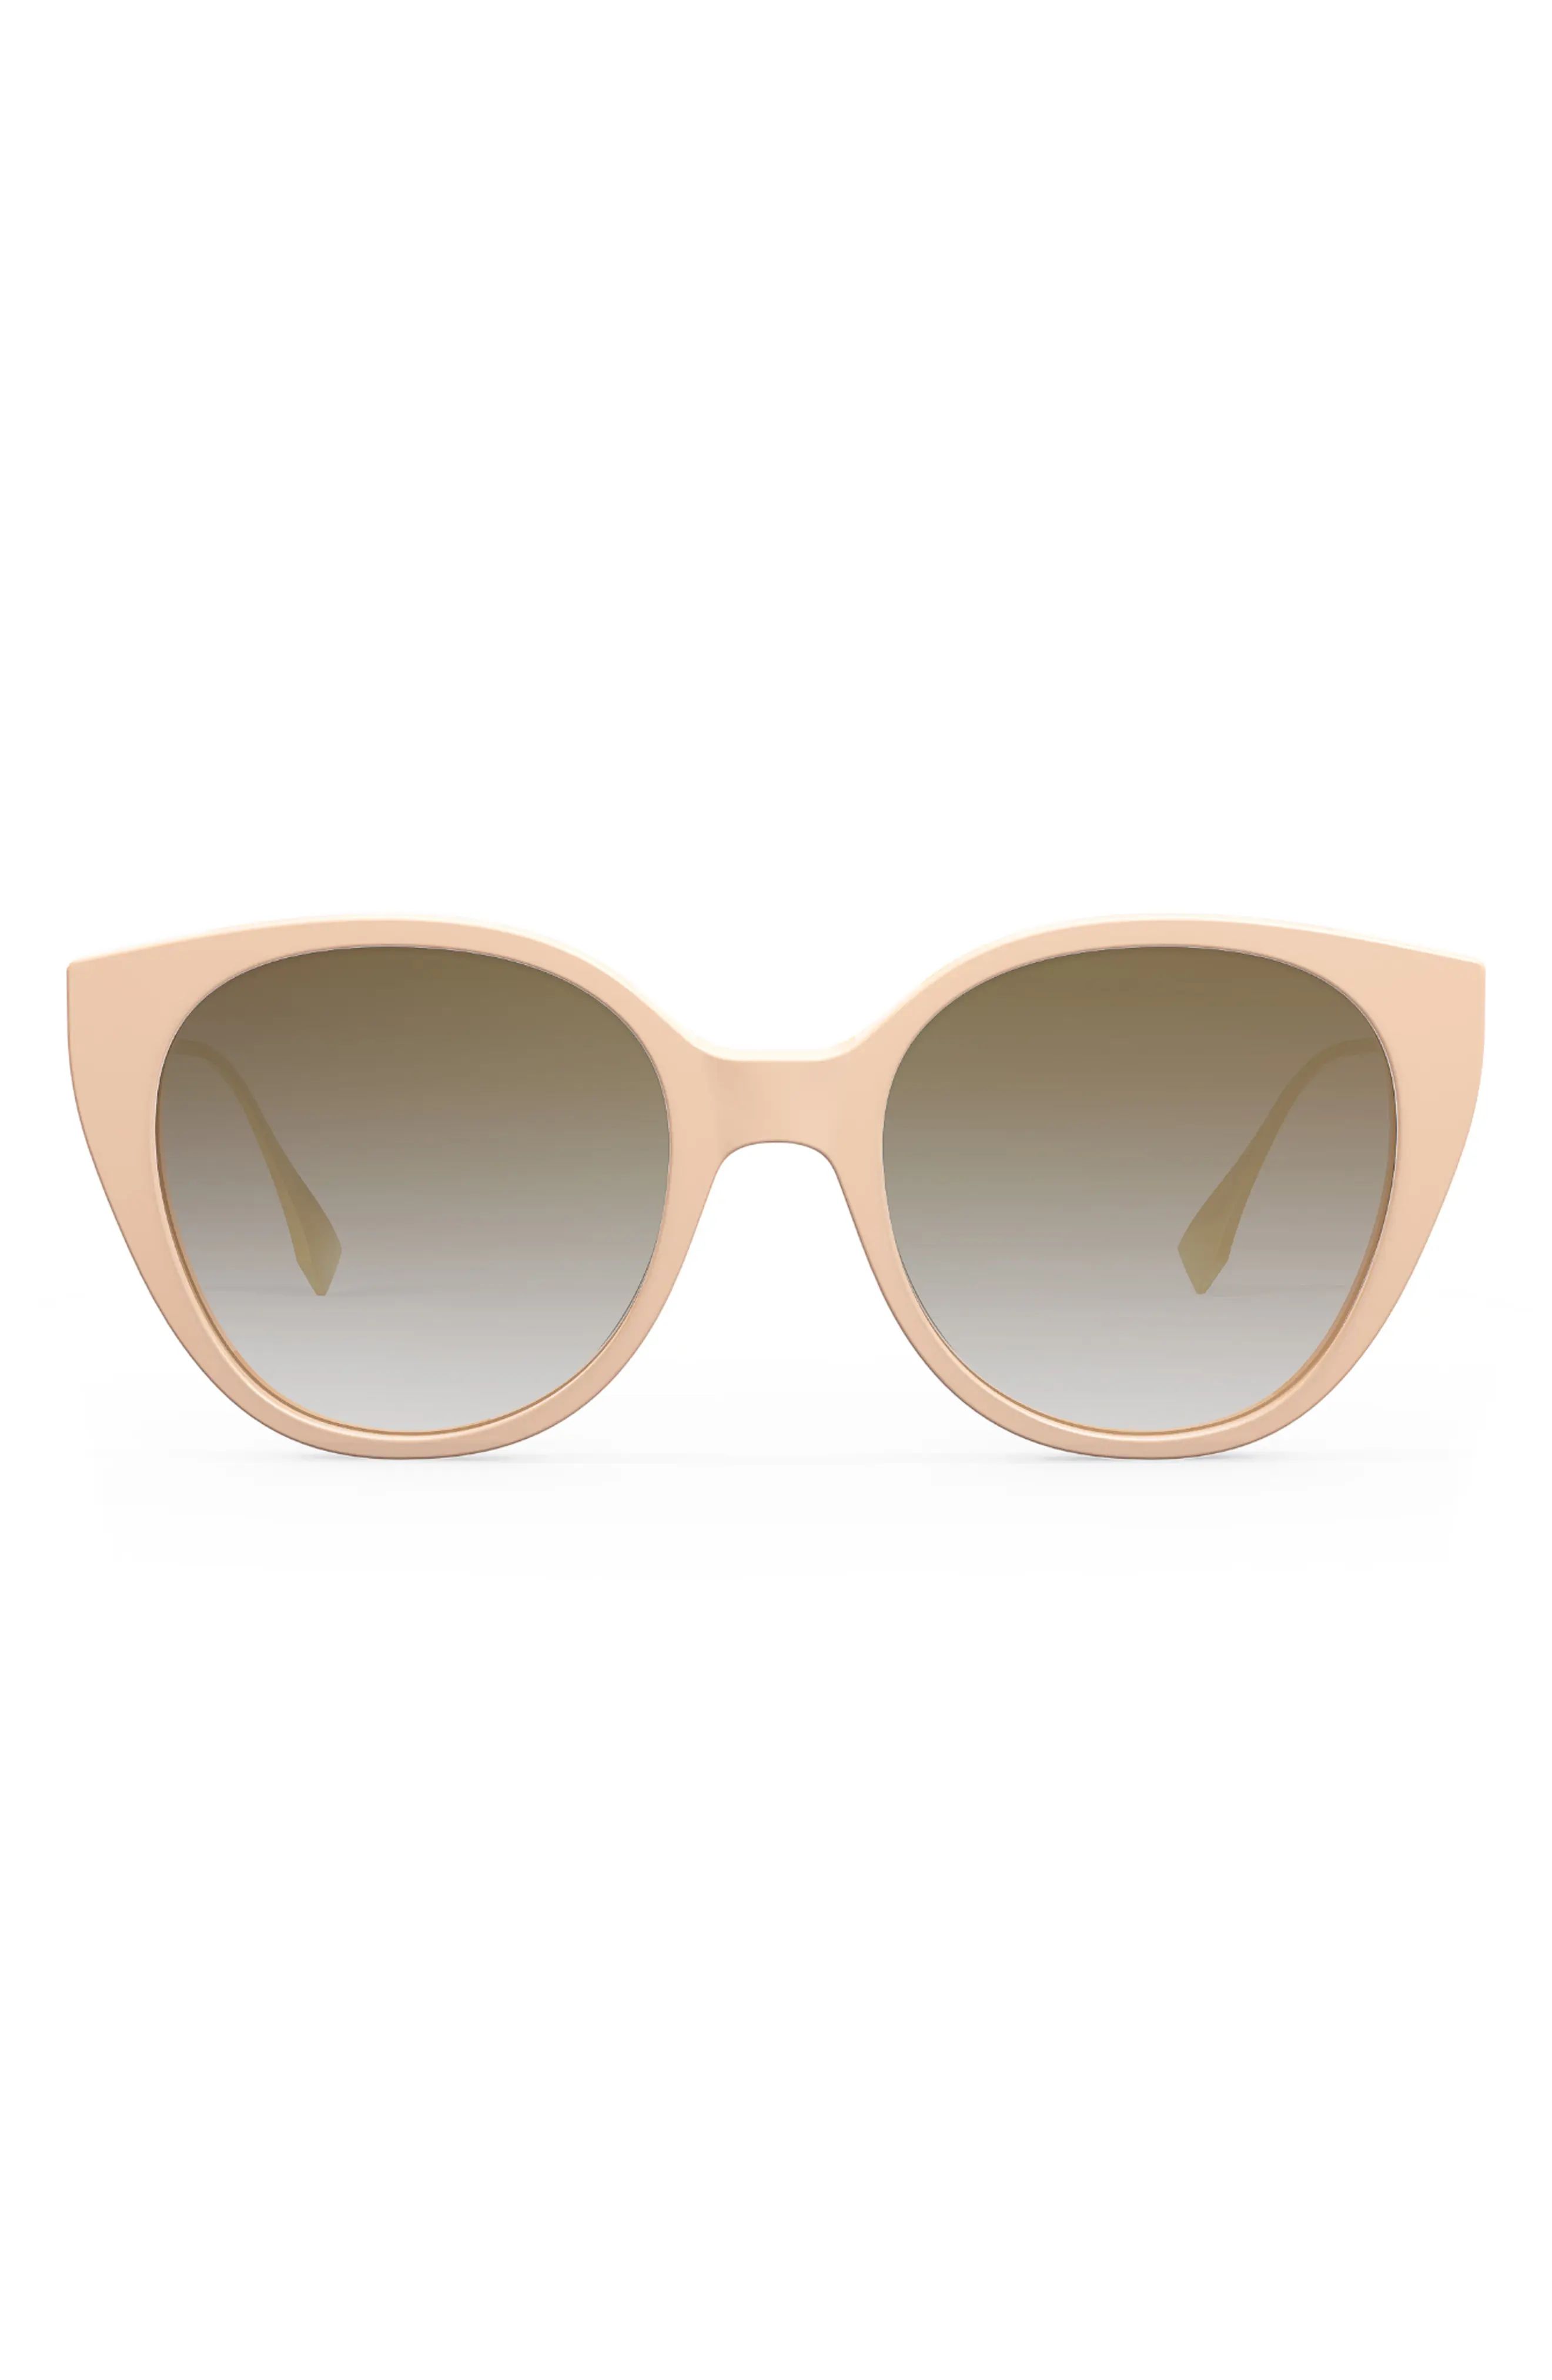 Fendi Baguette Cat Eye Sunglasses in Shiny Pink /Gradient Brown at Nordstrom | Nordstrom